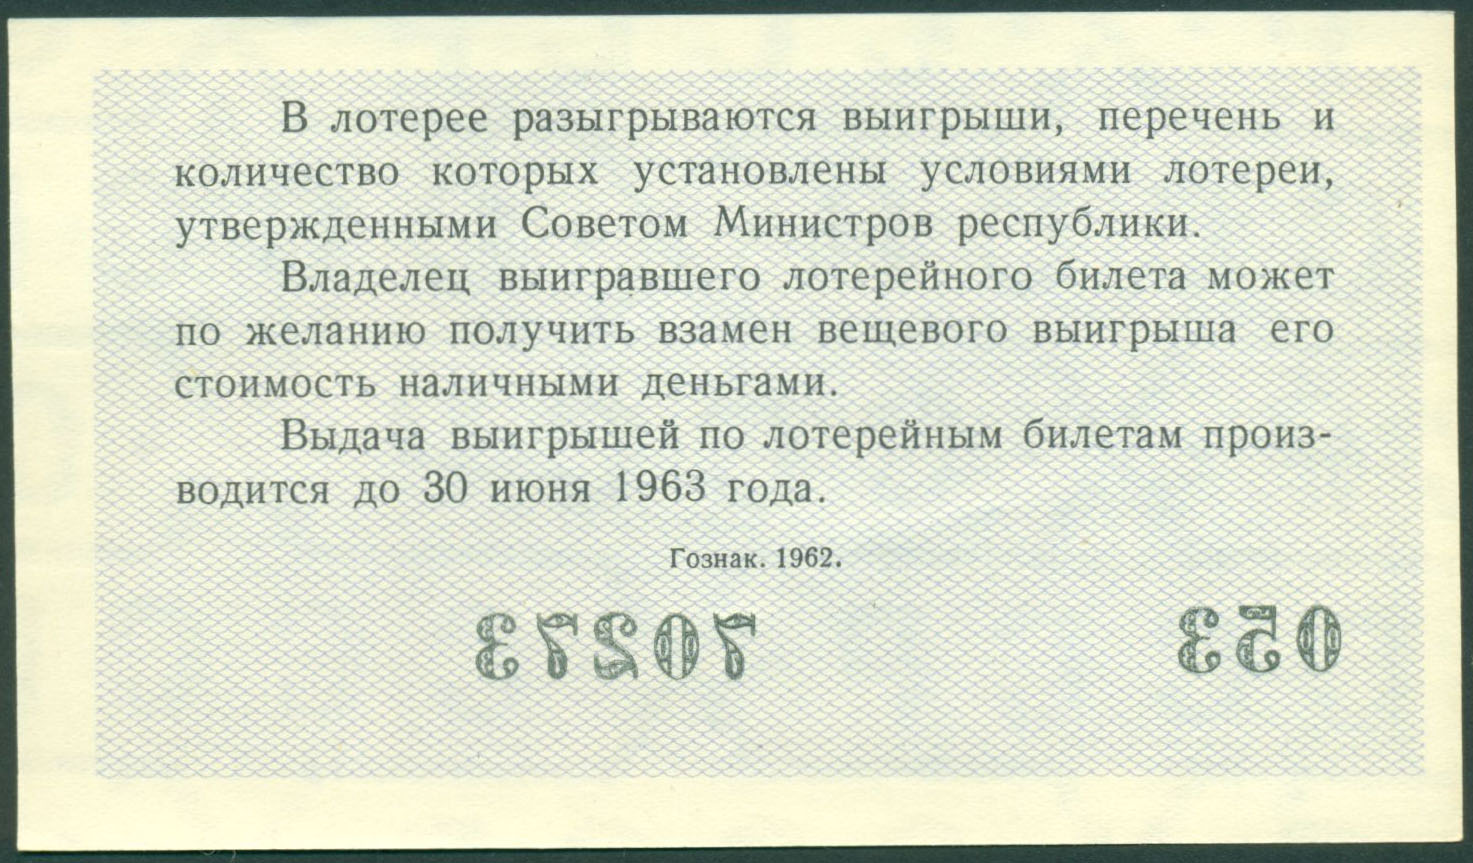 Лотерейный билет. Советская лотерея. Лотерейные билеты шаблоны для печати. Лотерейные билеты 1962. Билеты б 12